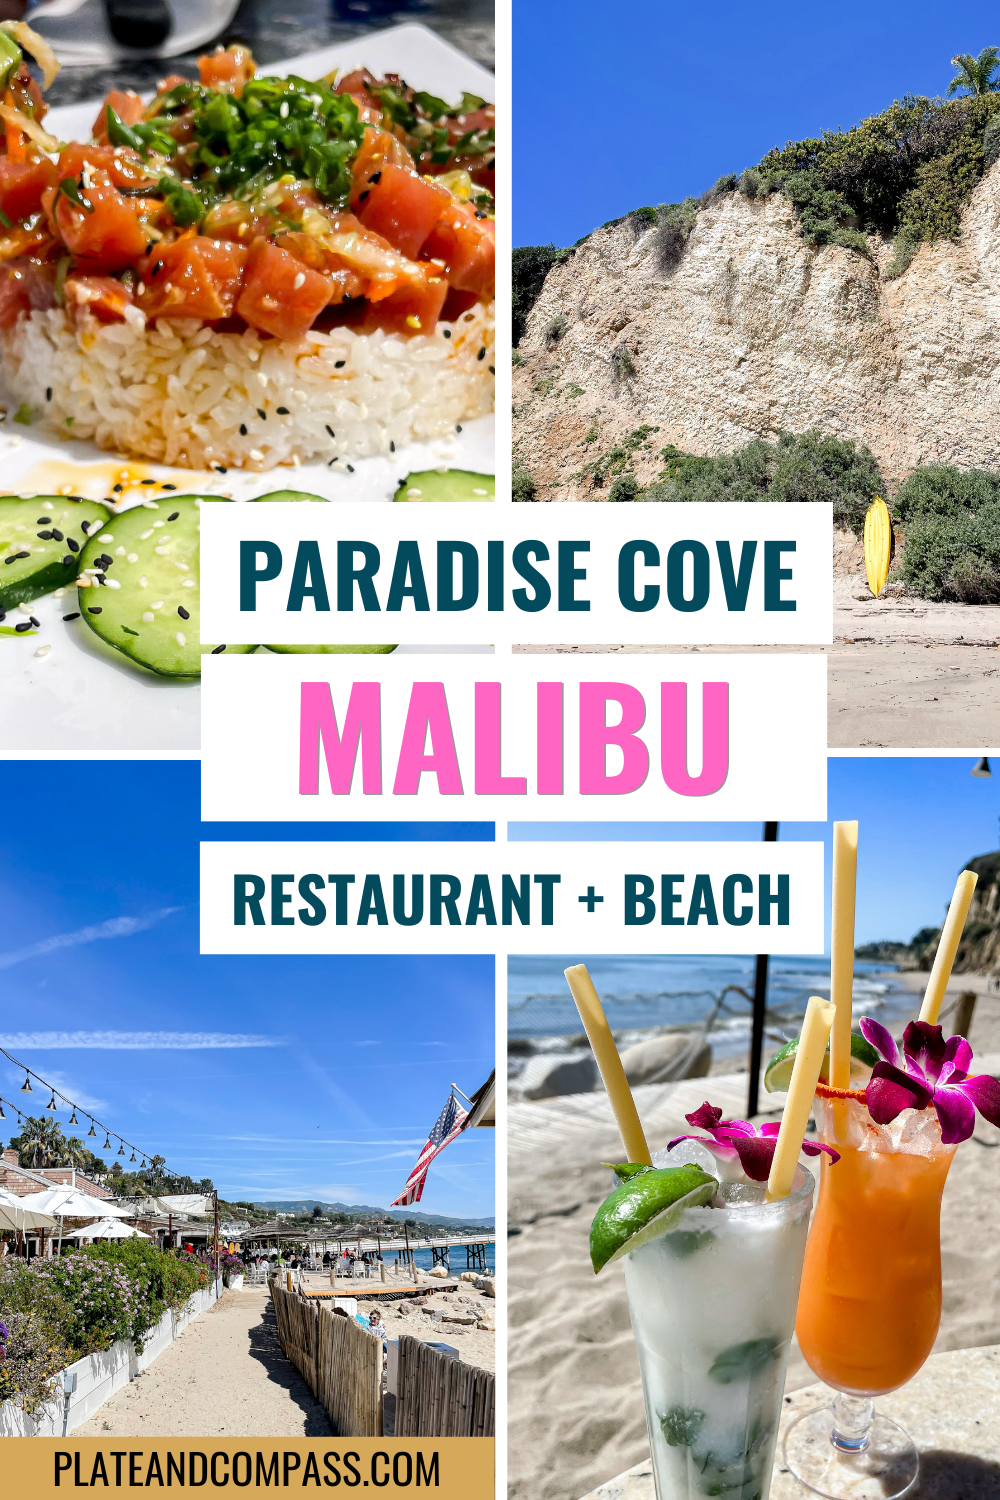 Paradise cove Malibu Restaurant and Beach